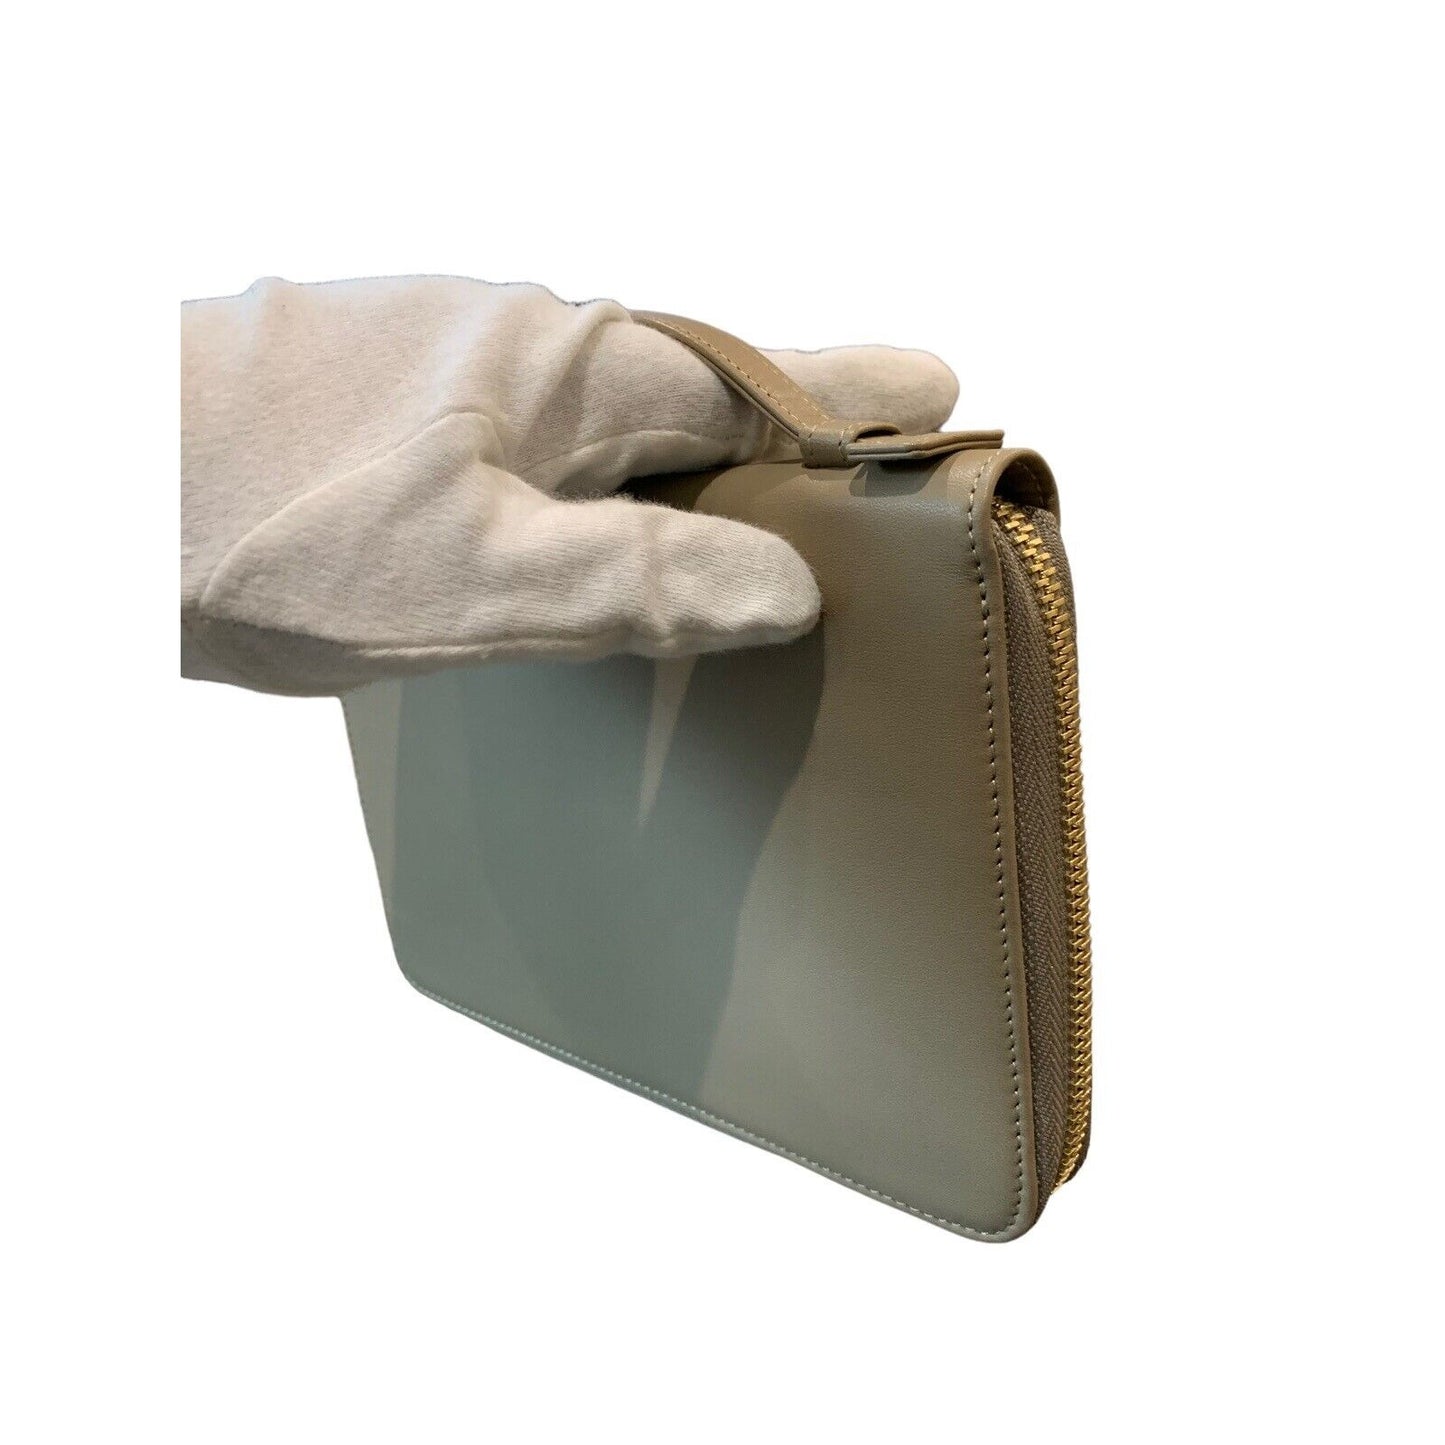 Canipelli Firenze Nappa Leather Zip-Around Wallet Clutch